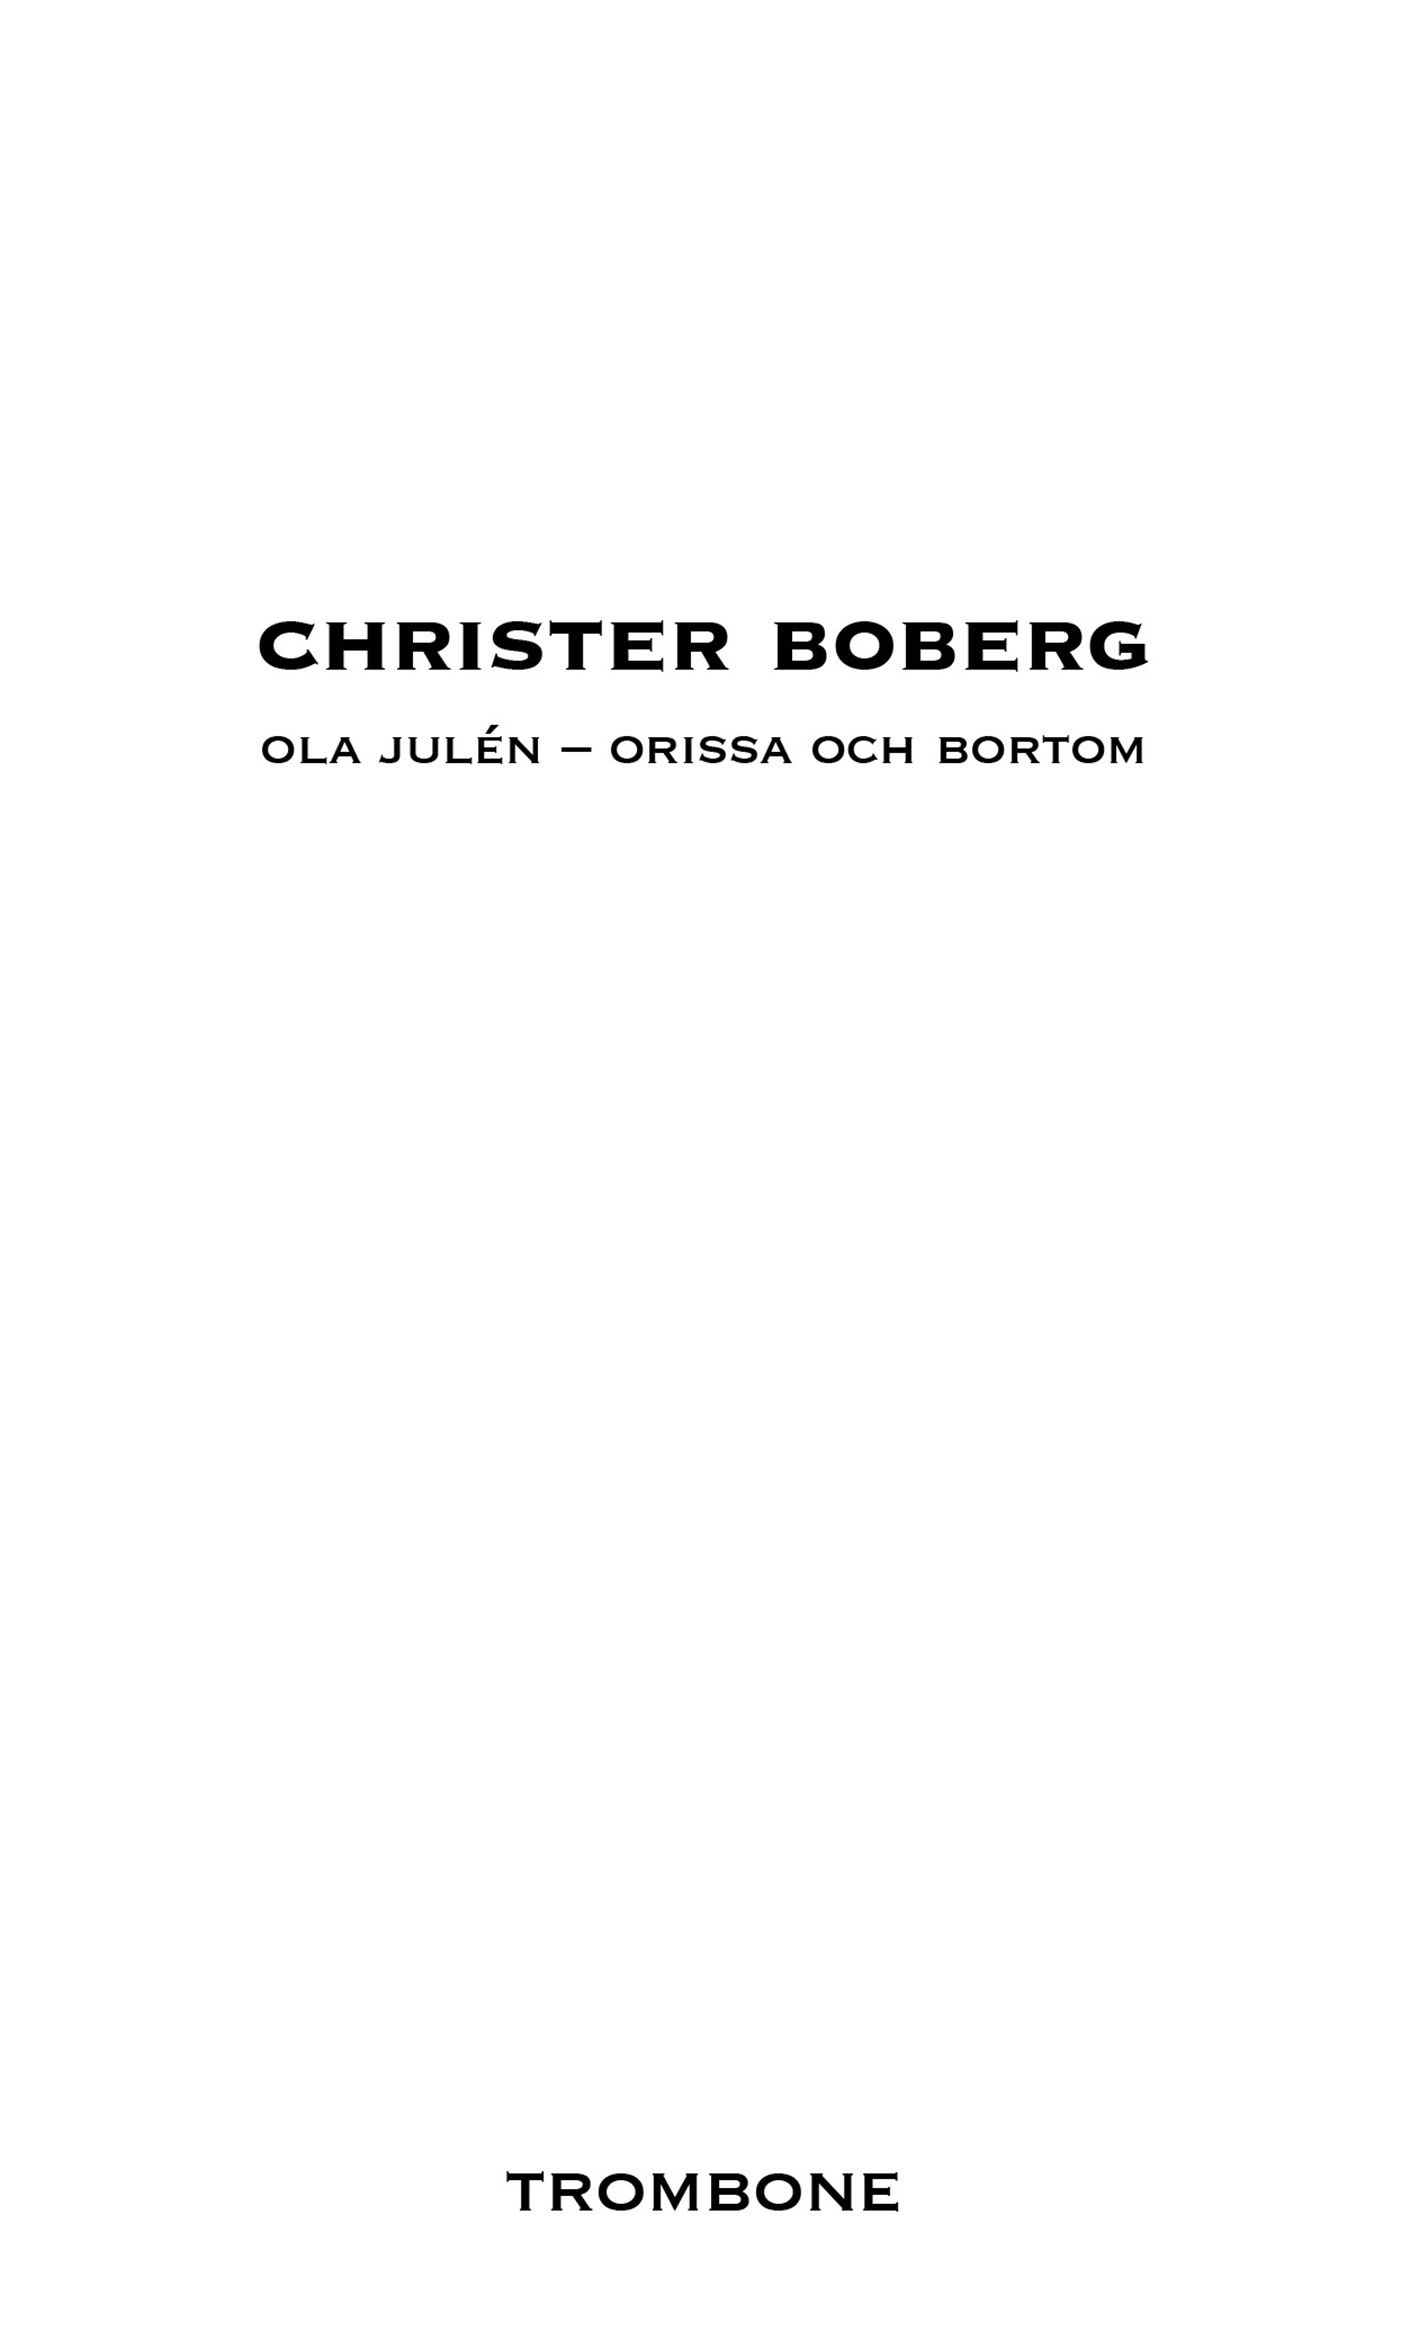 Ola Julén - Orissa och bortom, e-bog af Christer Boberg